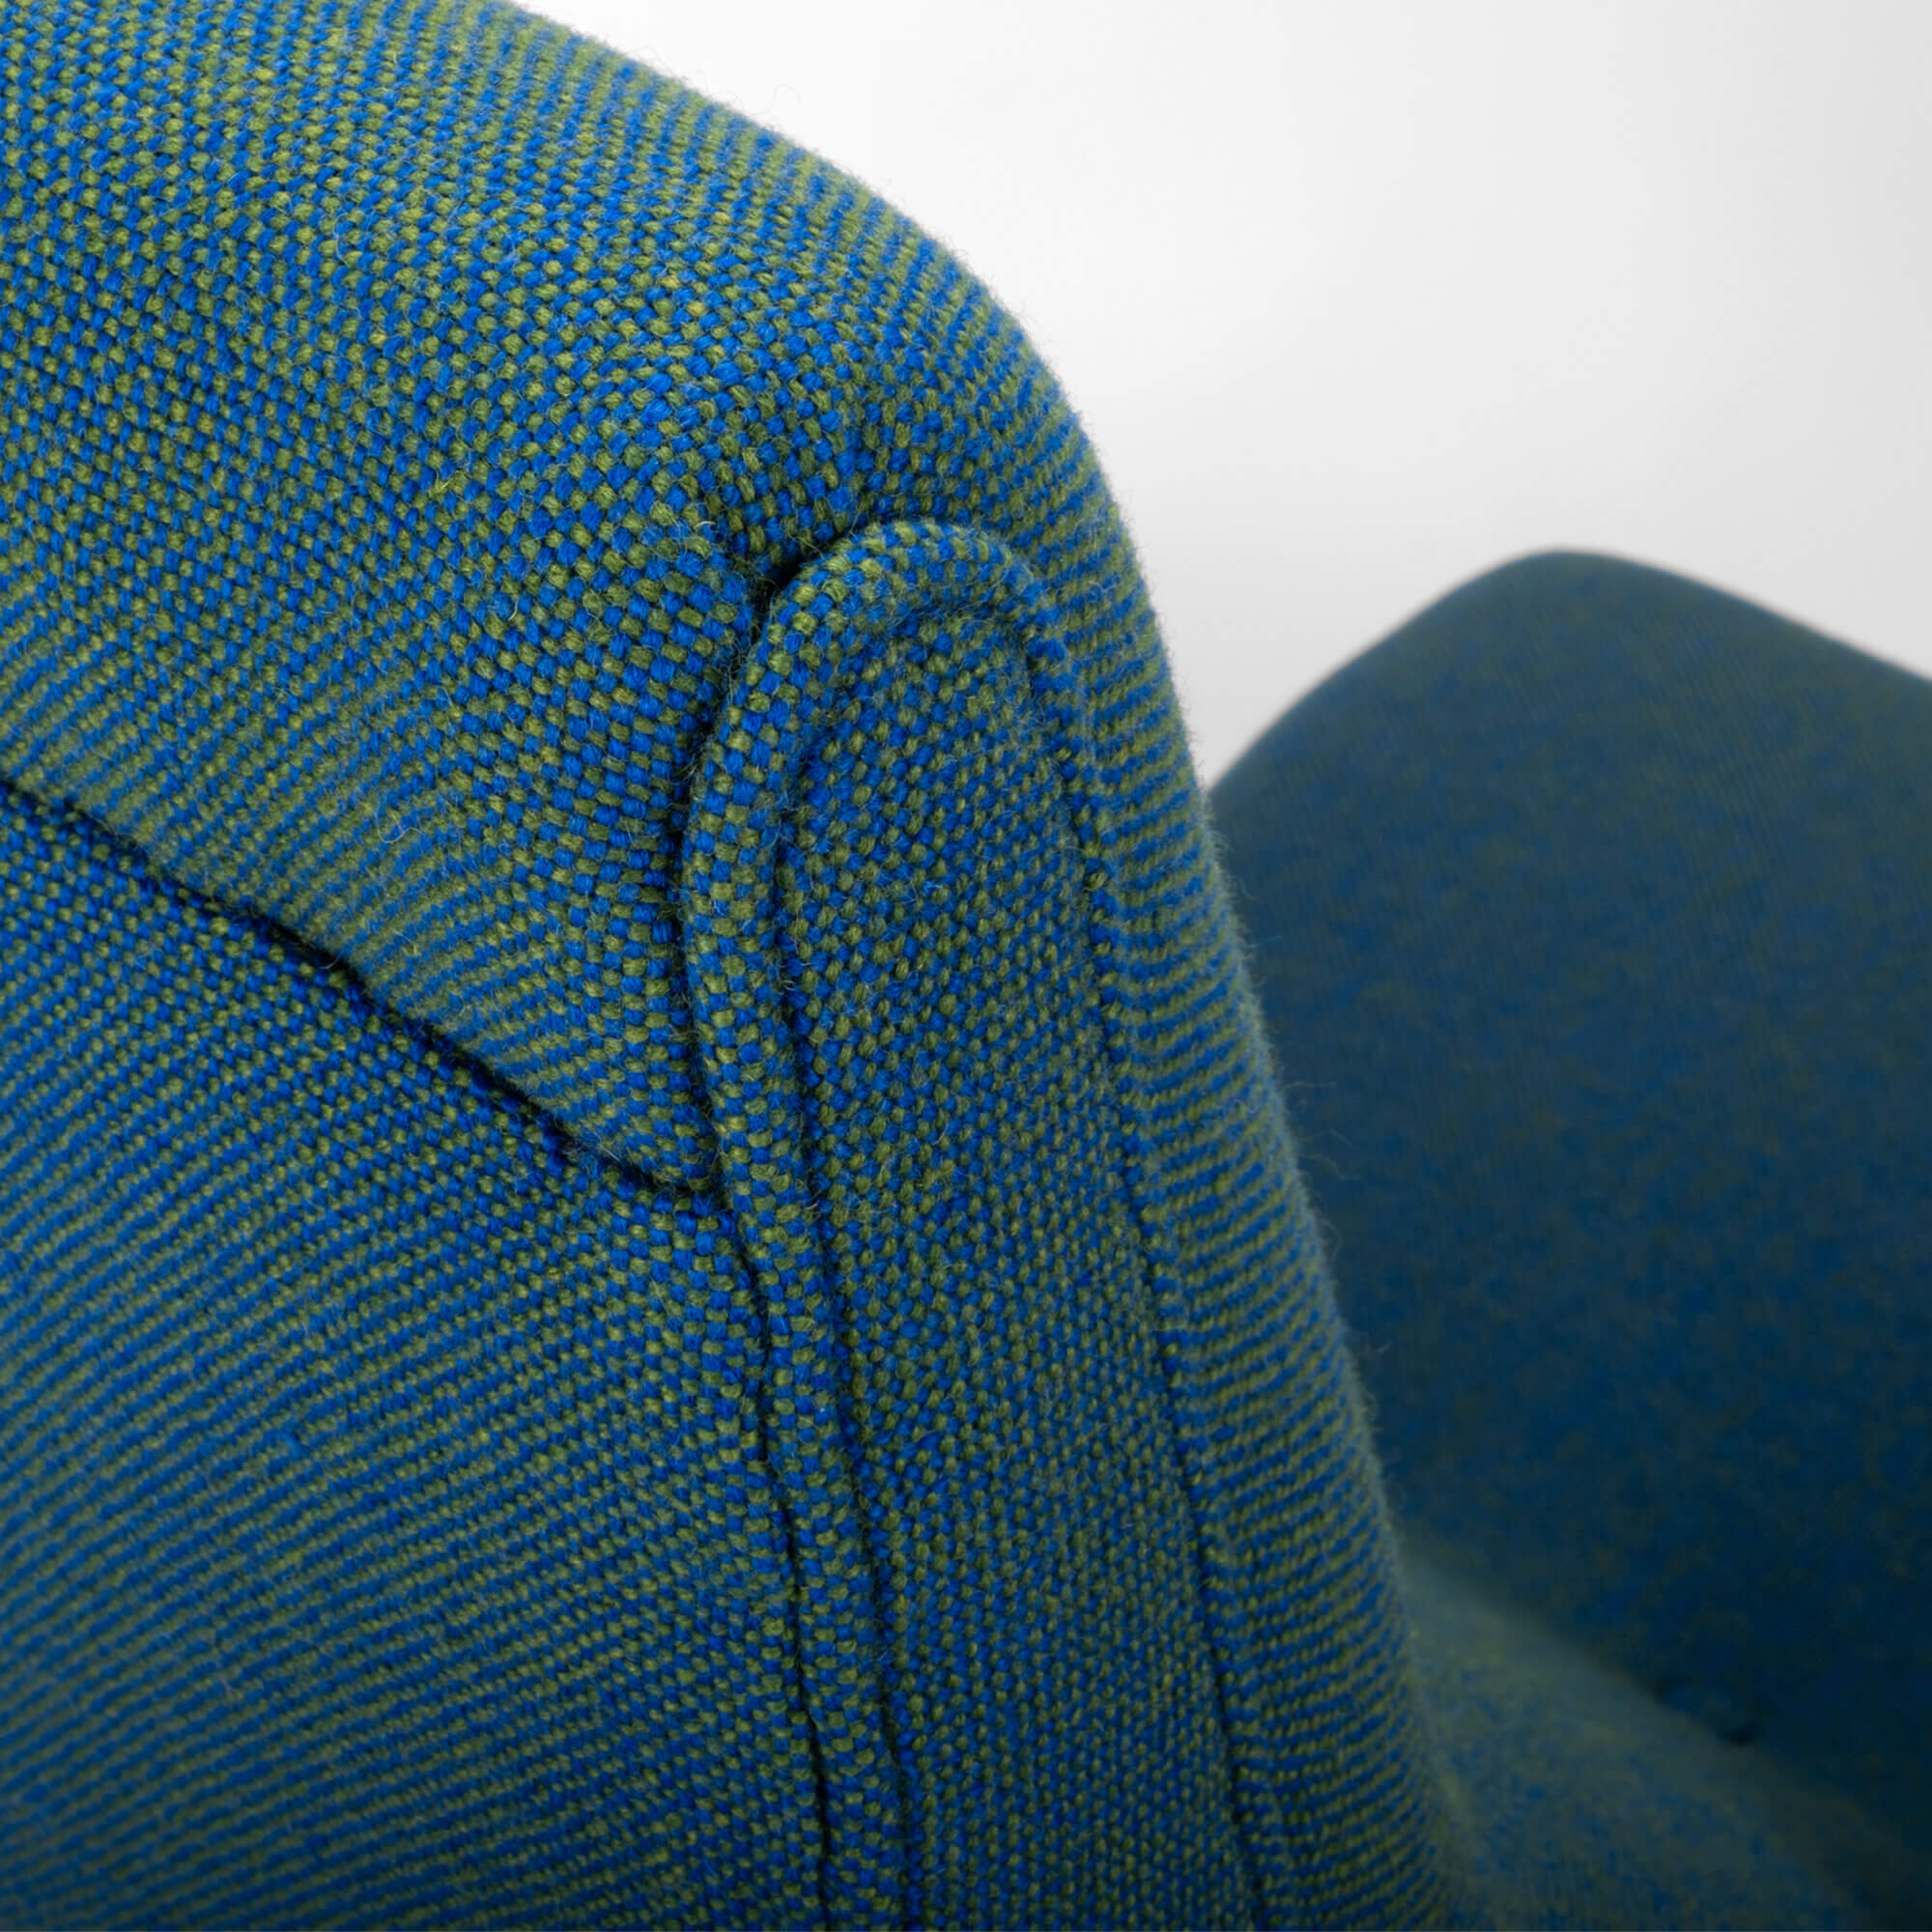 Eero Saarinen Grasshopper lounge chair close up from head end